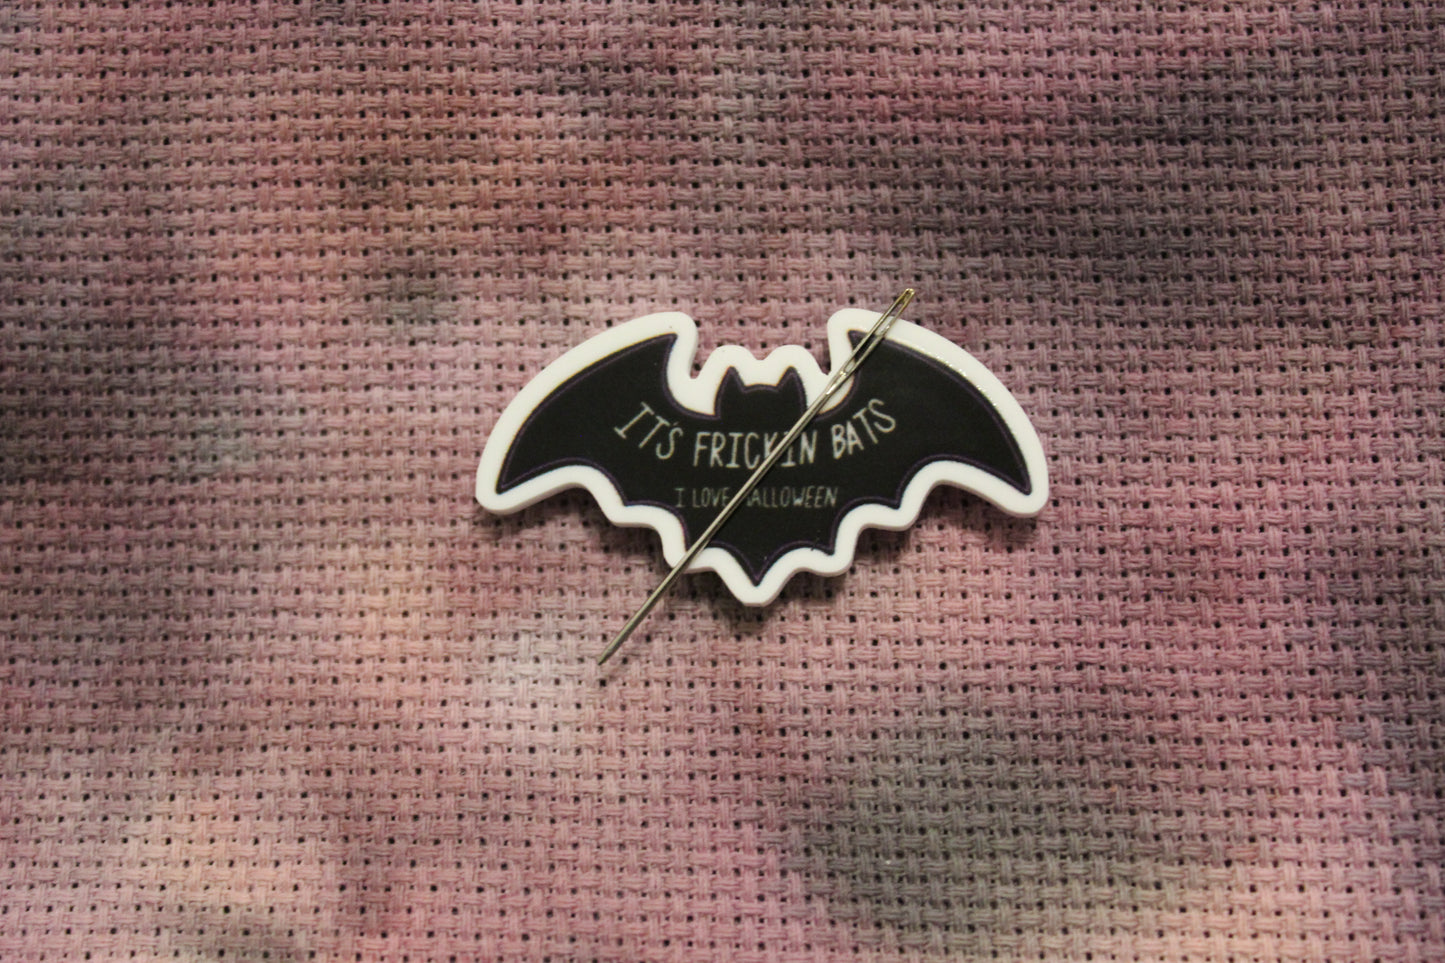 It's Frickin Bats! Needle Minder